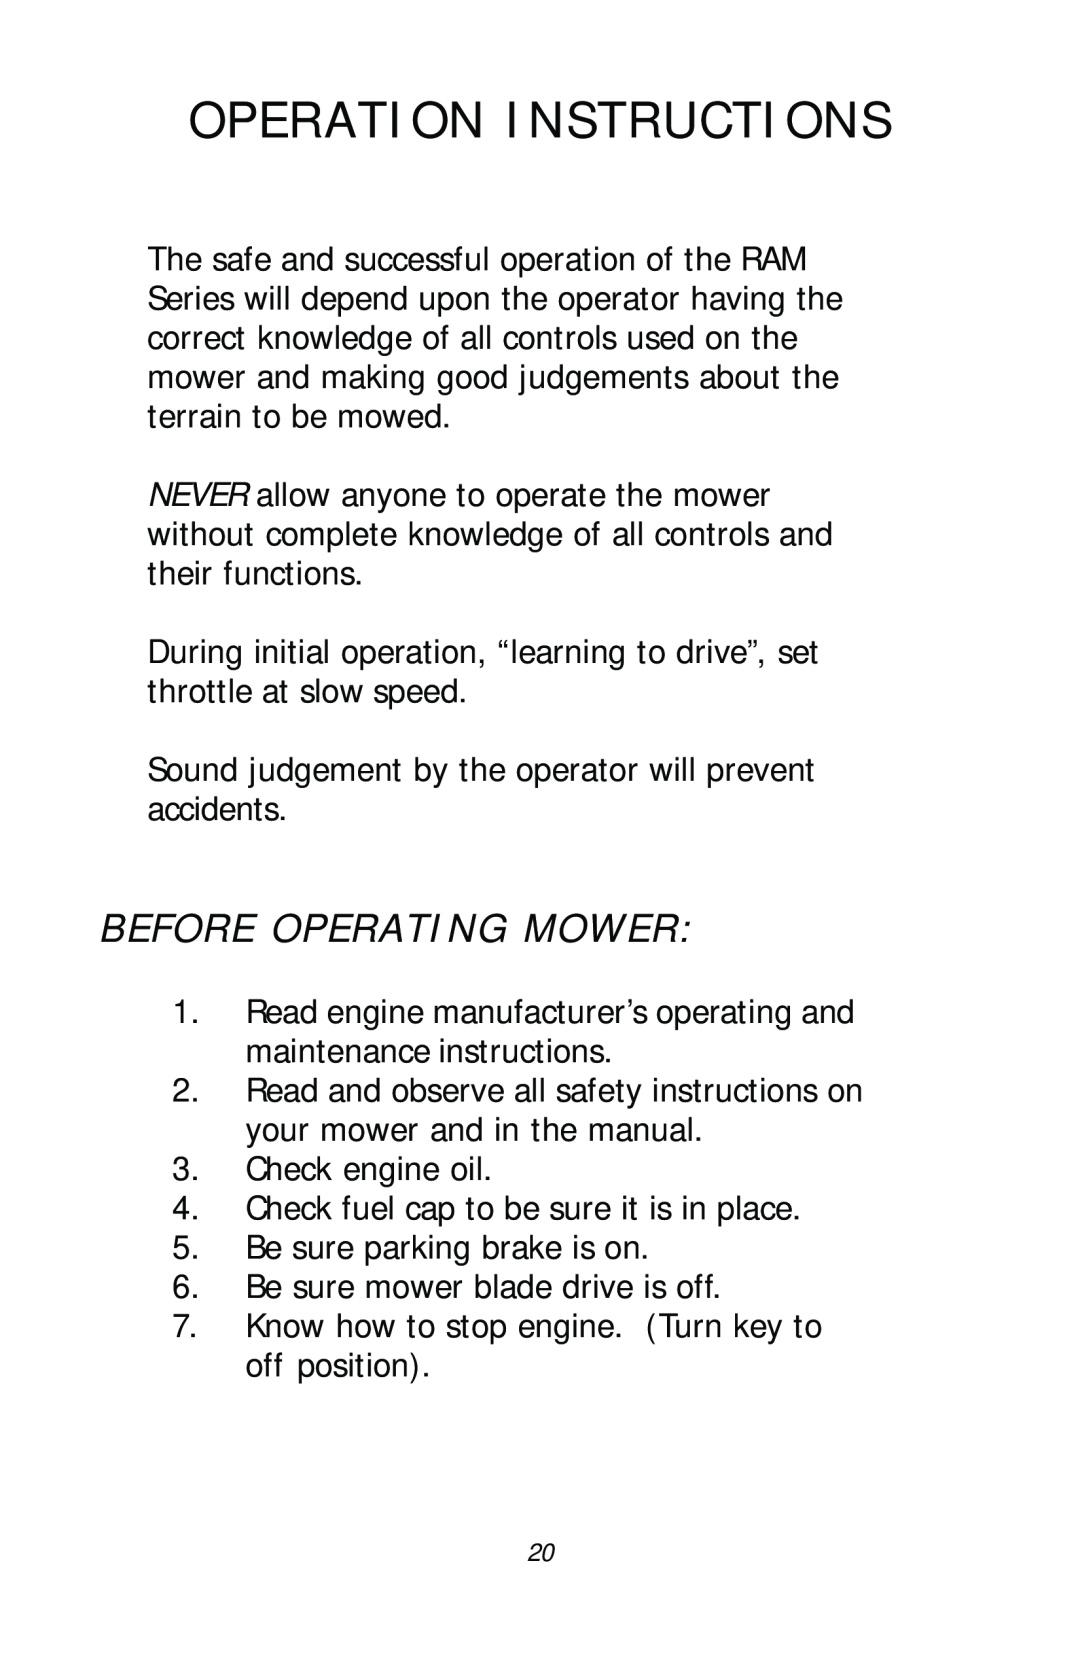 Dixon ZTR RAM 50, 17411-1103 manual Operation Instructions, Before Operating Mower 